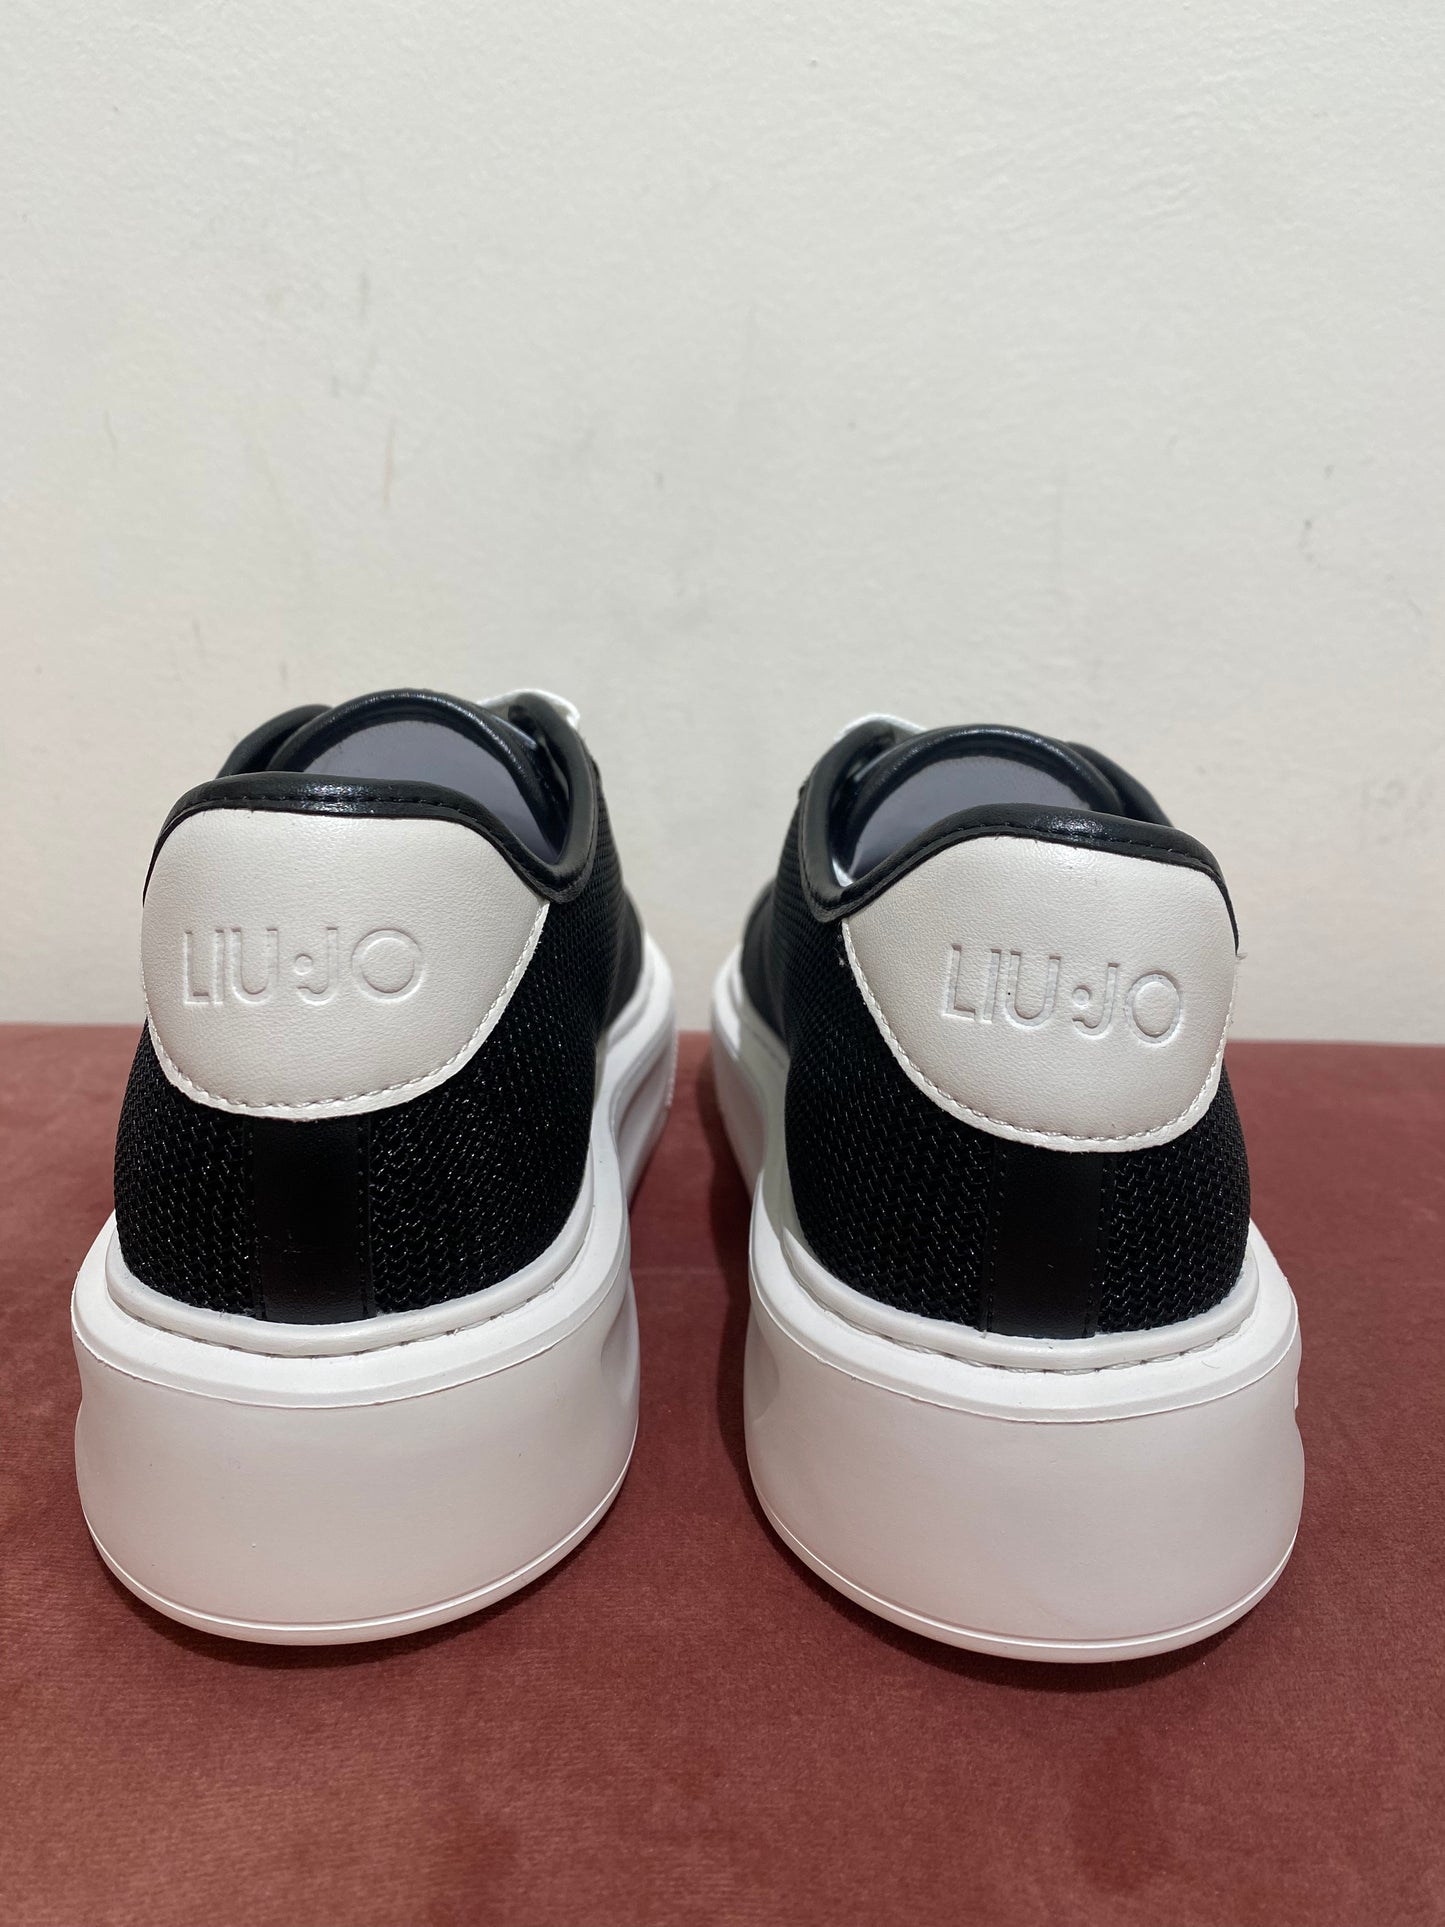 Sneakers in brighty mesh logo LiuJo nero